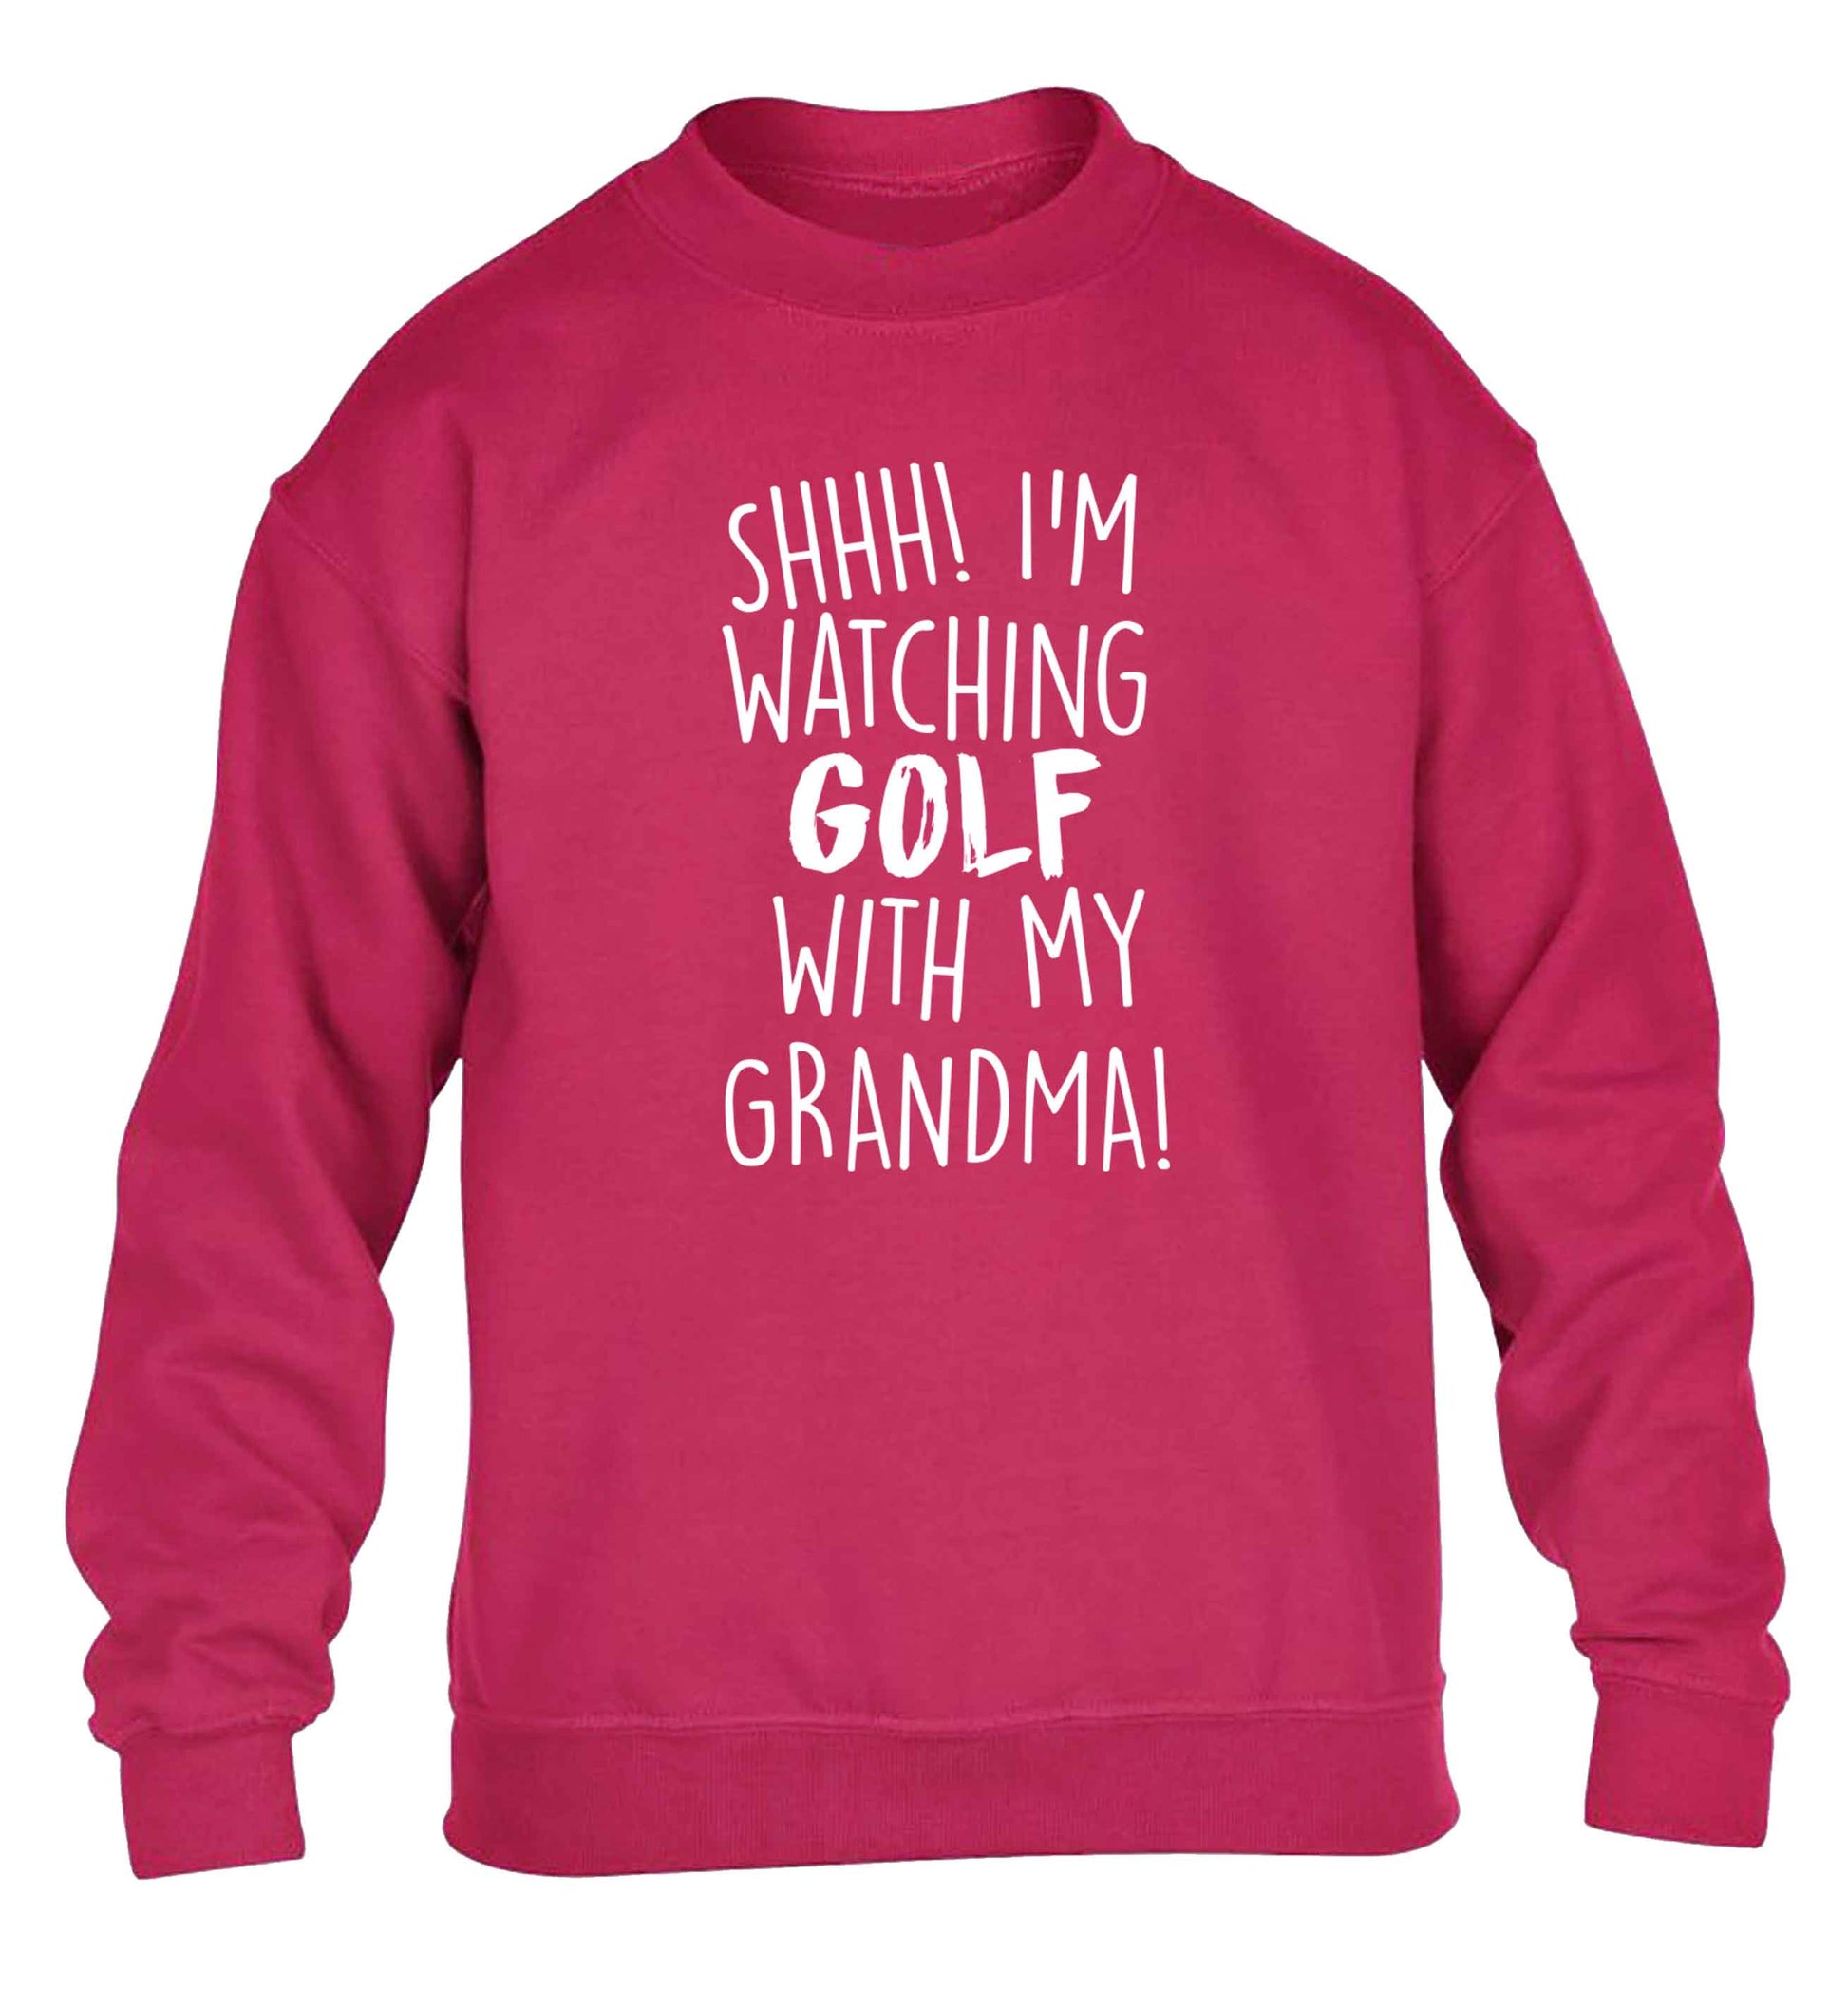 Shh I'm watching golf with my grandma children's pink sweater 12-13 Years